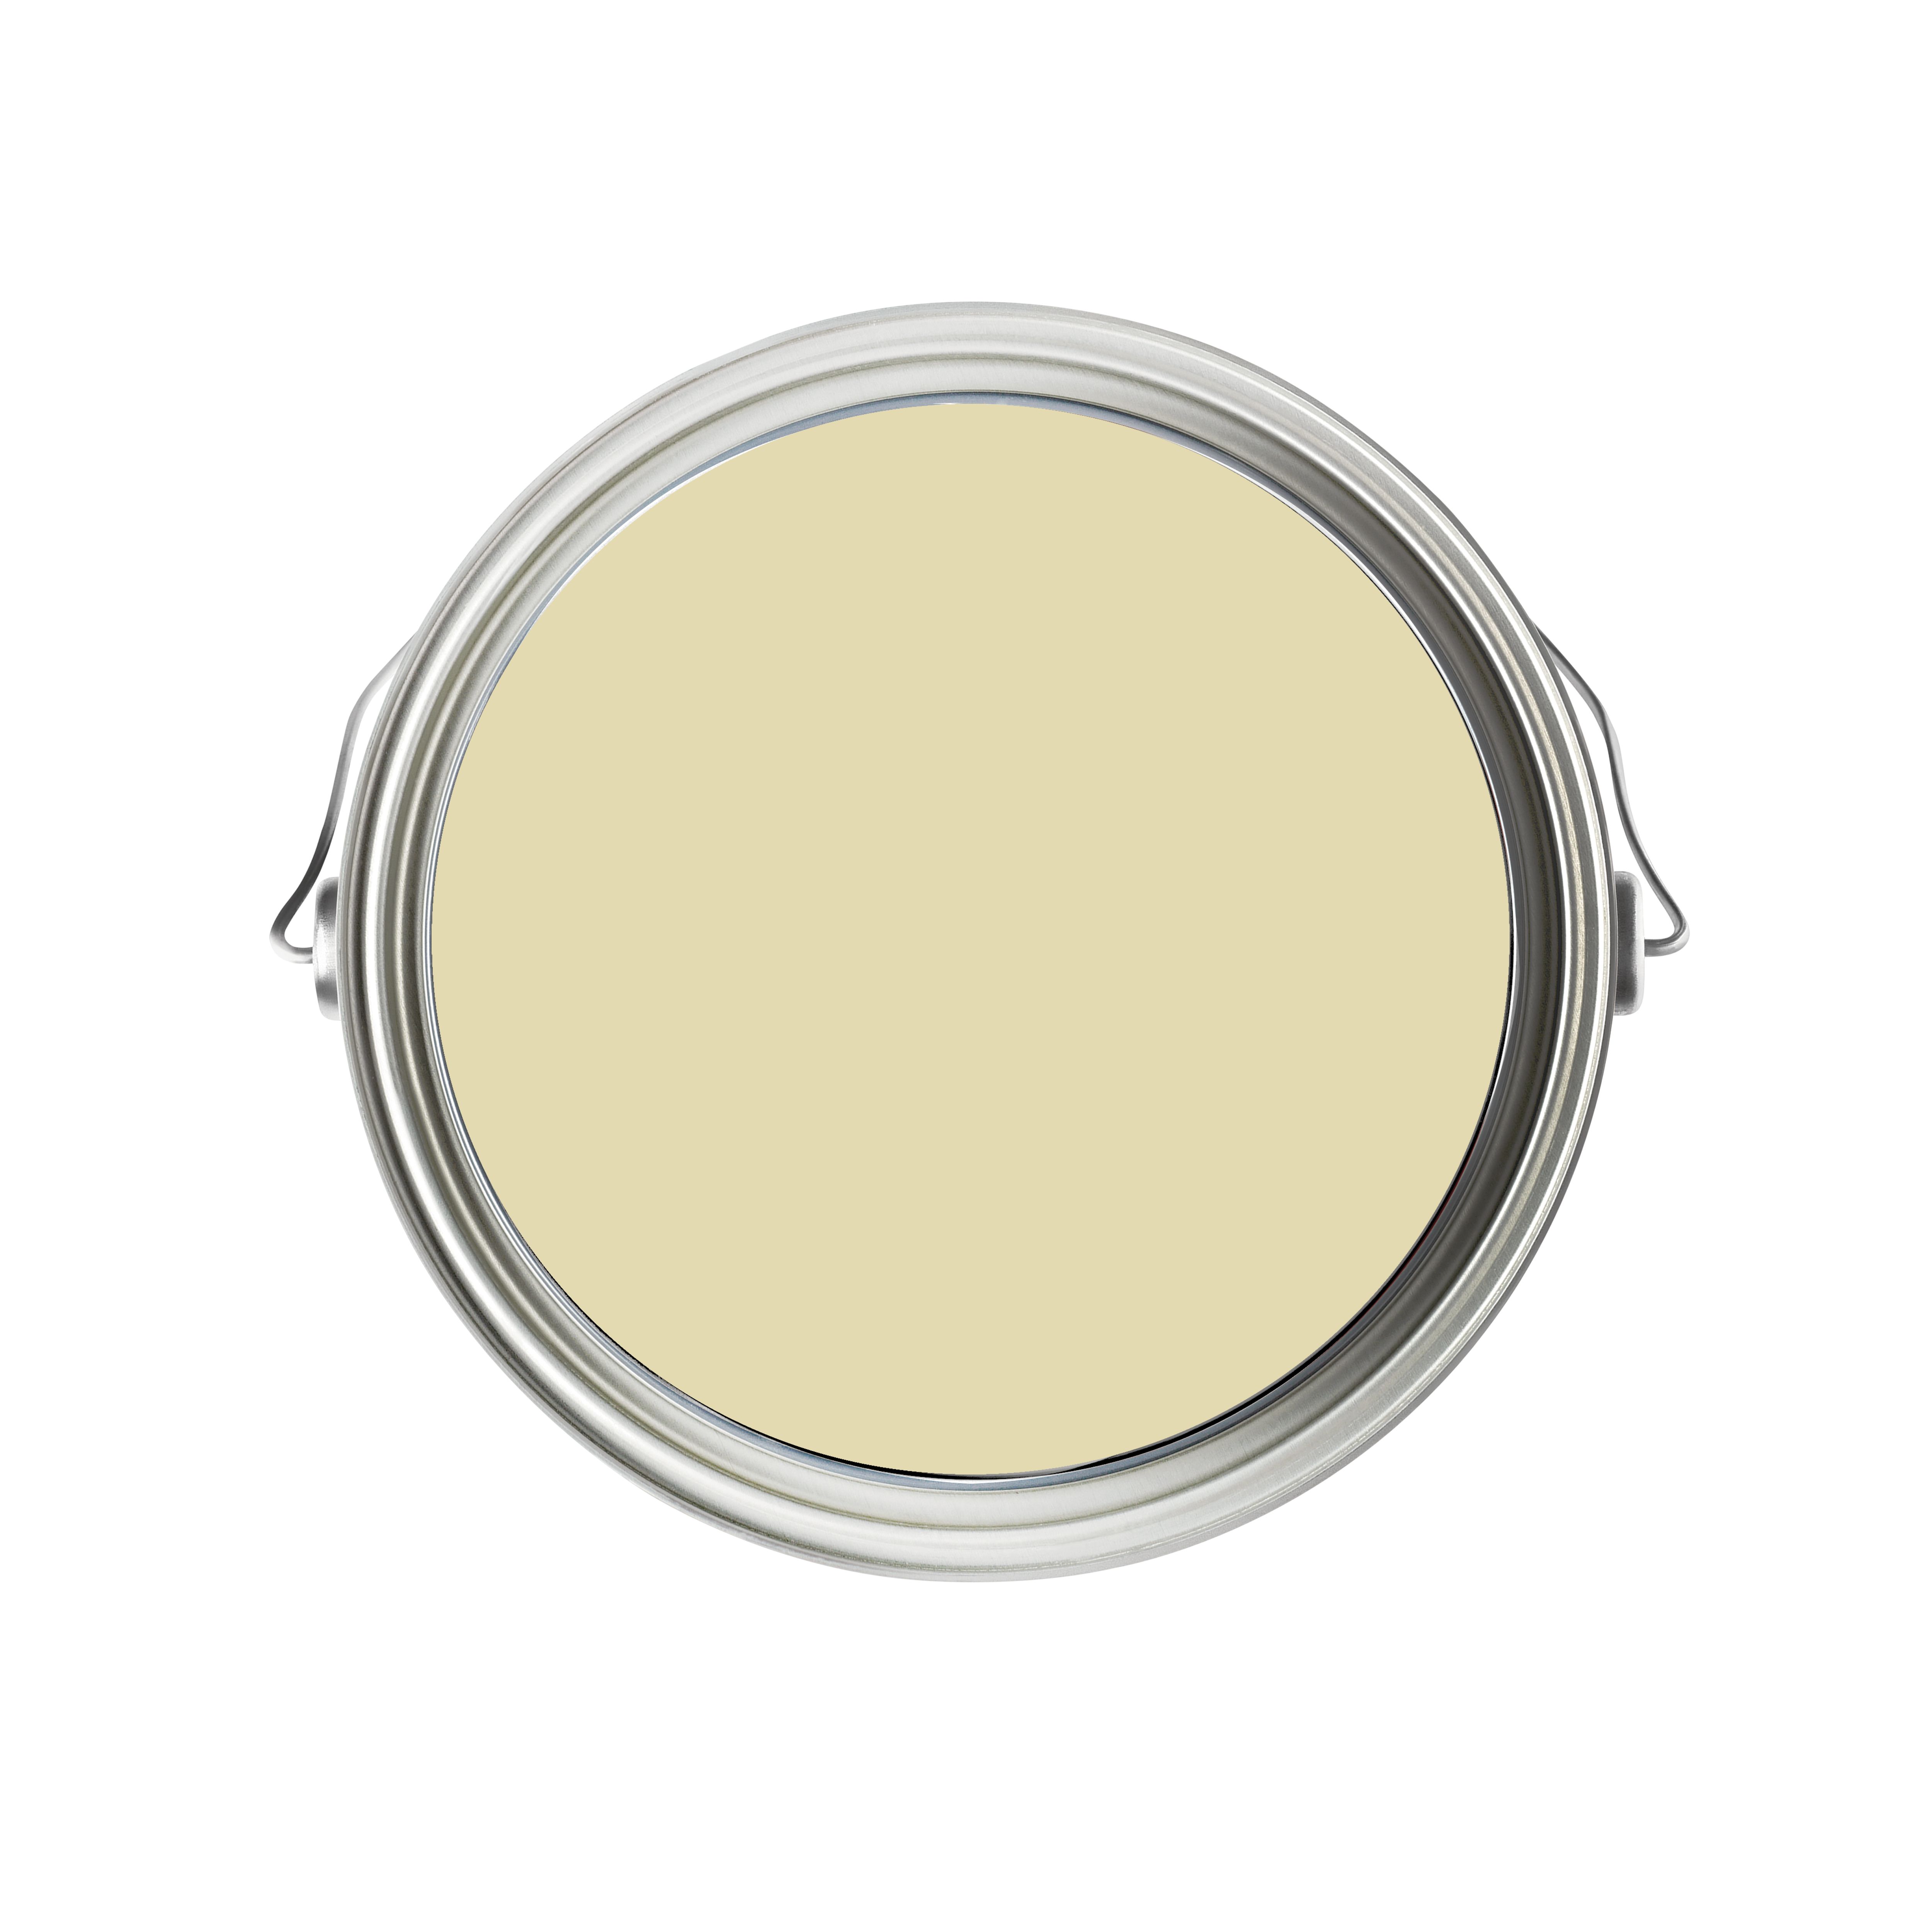 Fleetwood Shy Yellow Vinyl matt Emulsion paint, 75ml Tester pot